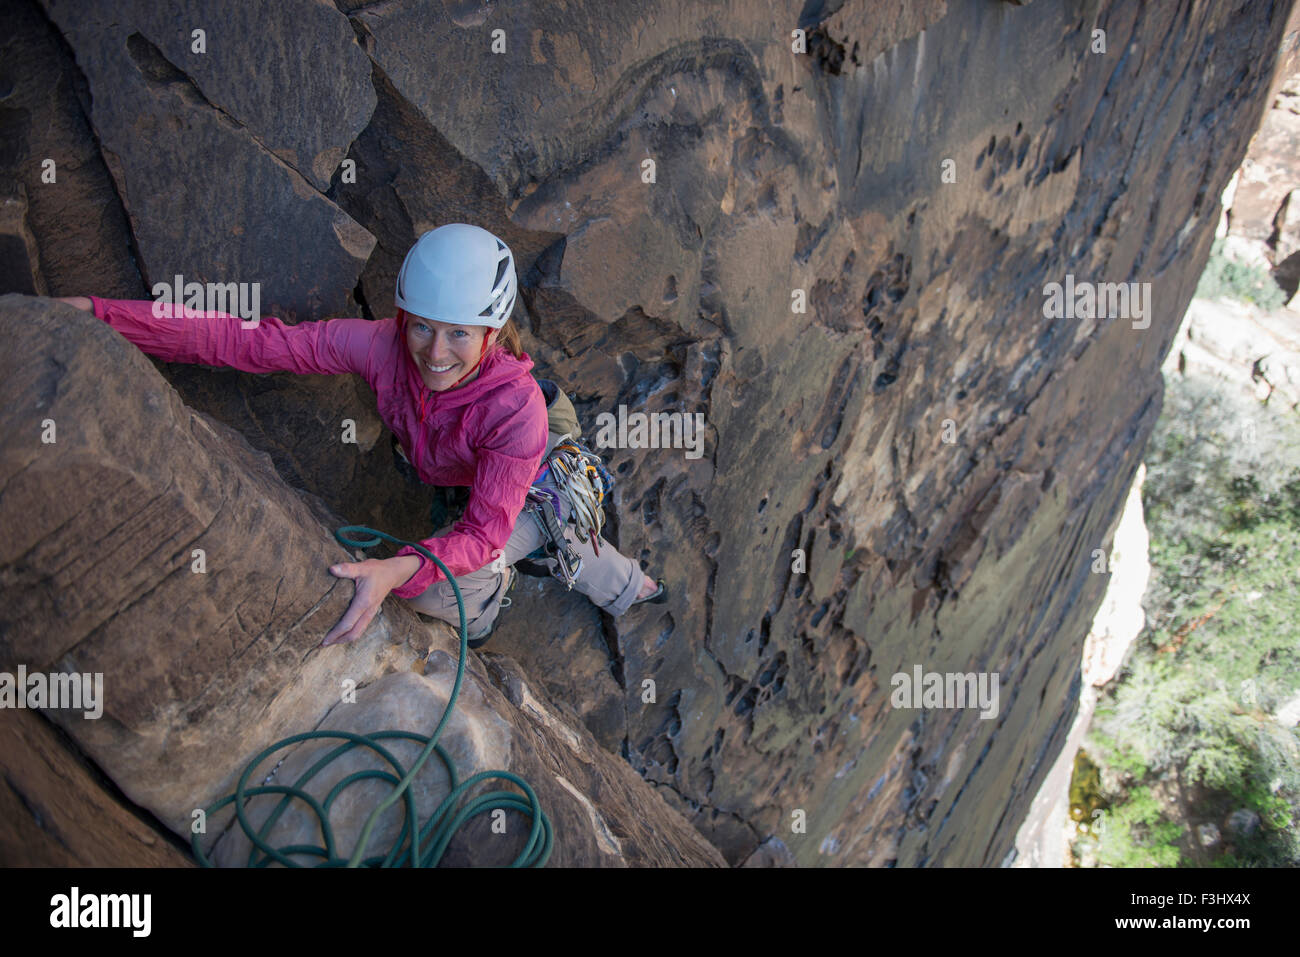 Escalador Angela Seidling escalada en roca roja, zona de conservación. Foto de stock